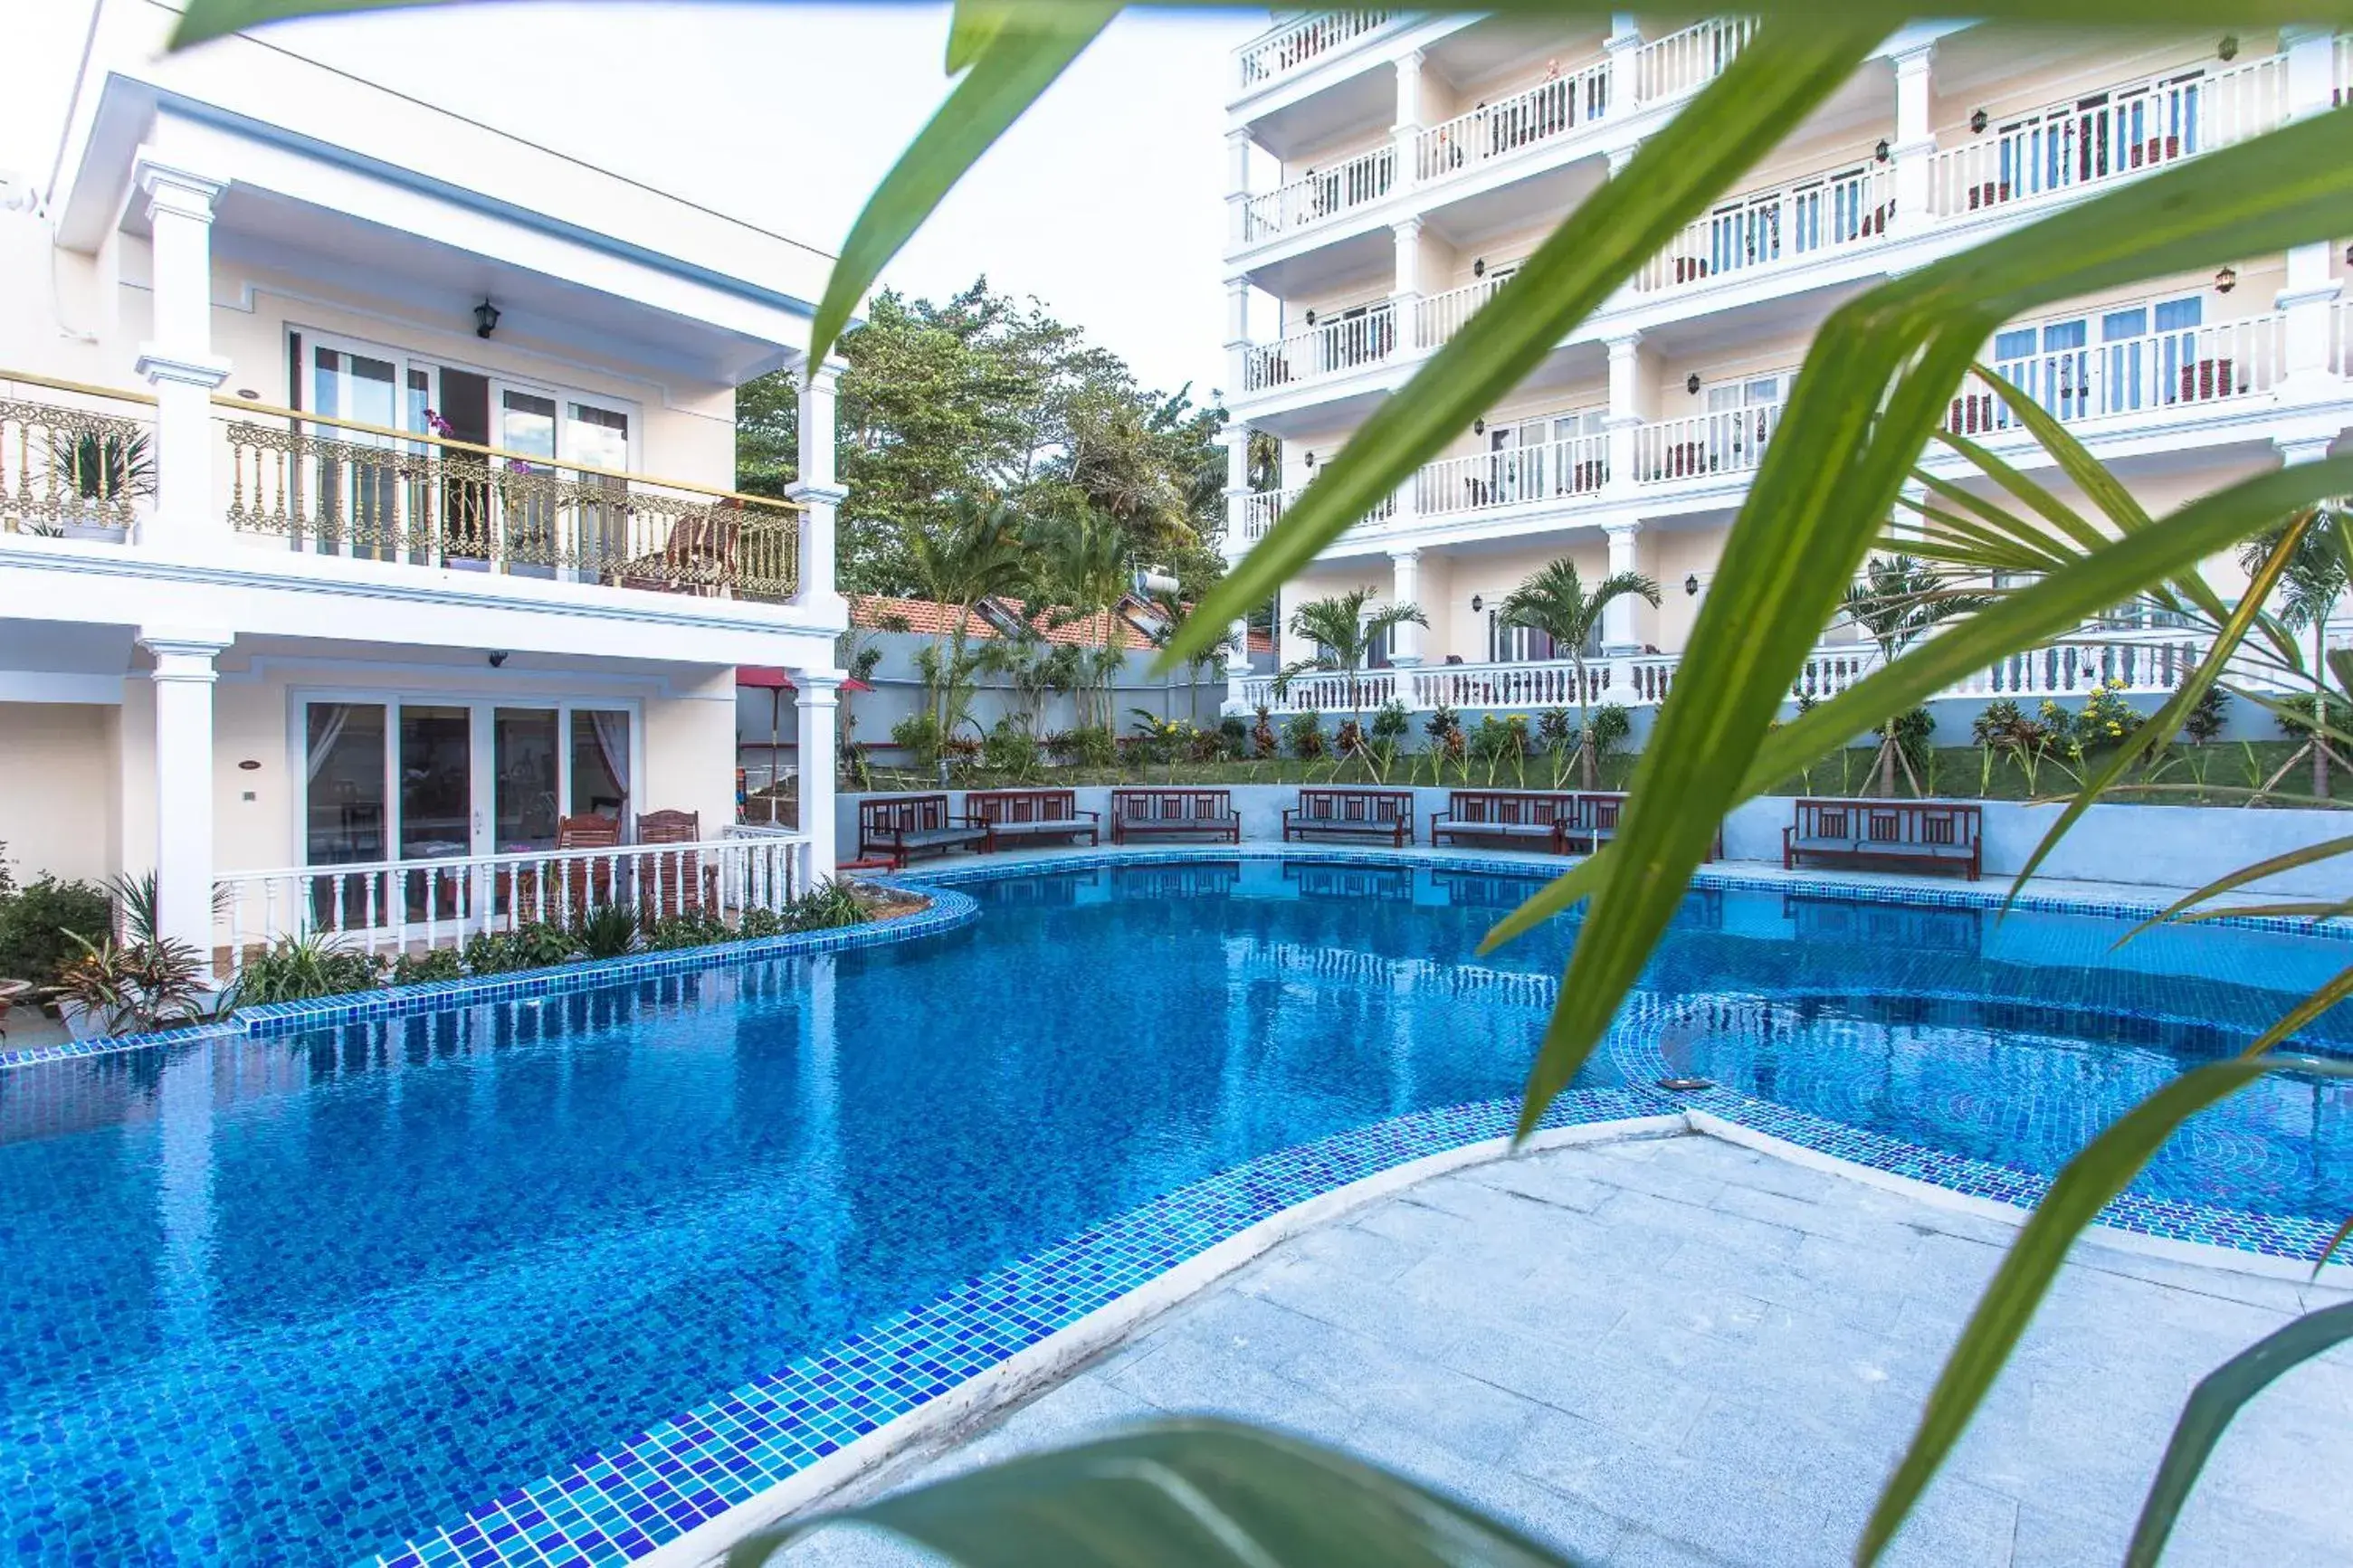 Swimming Pool in Phuong Binh House